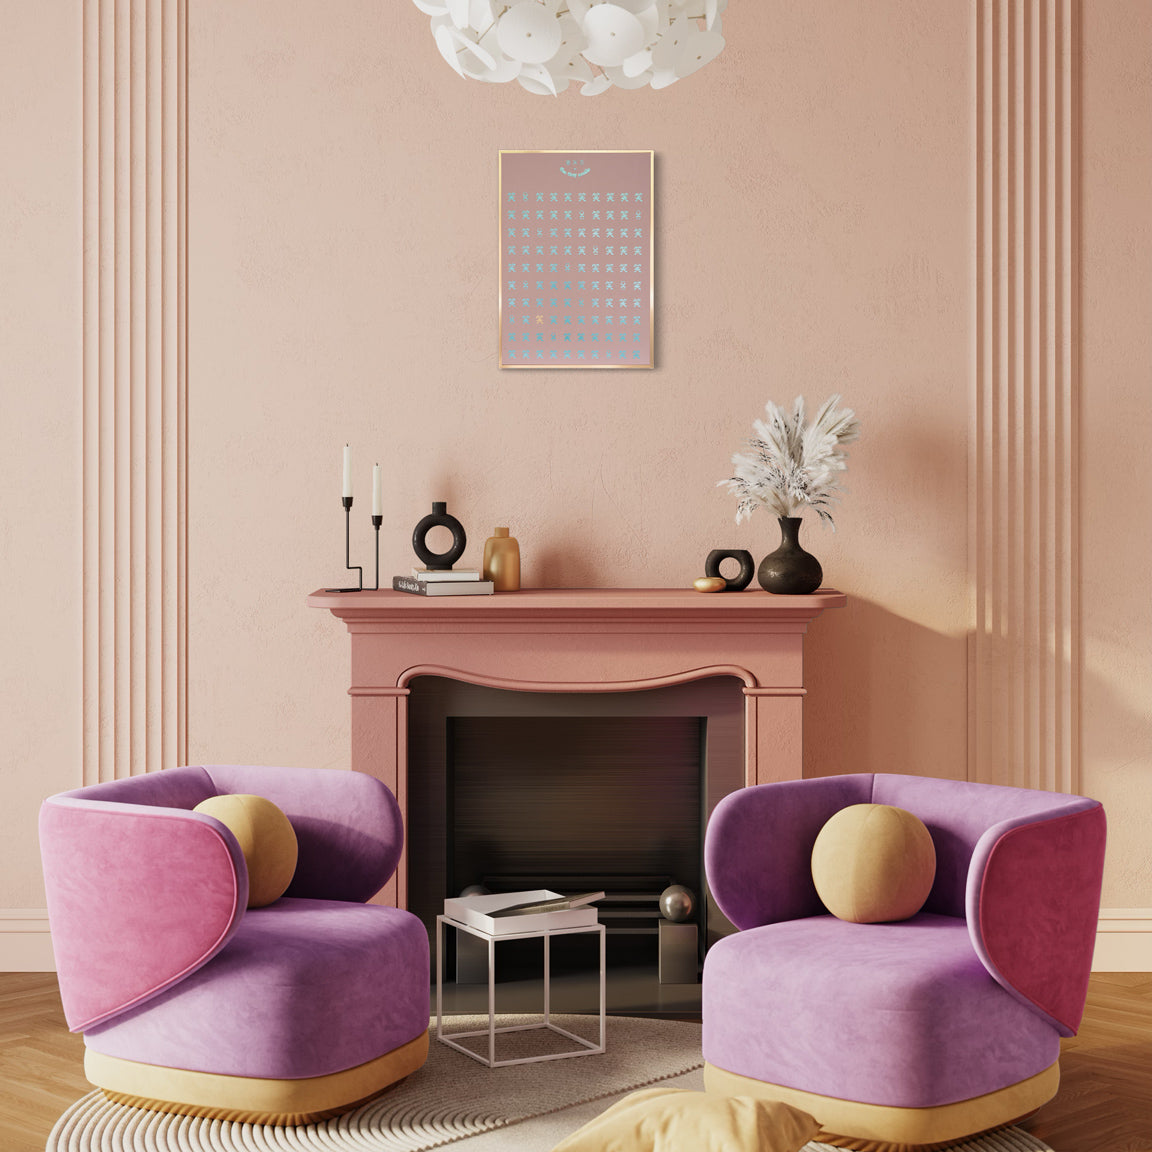 百笑圖 粉紅 家 粉紅控 pink home 100 smiles print interior decor